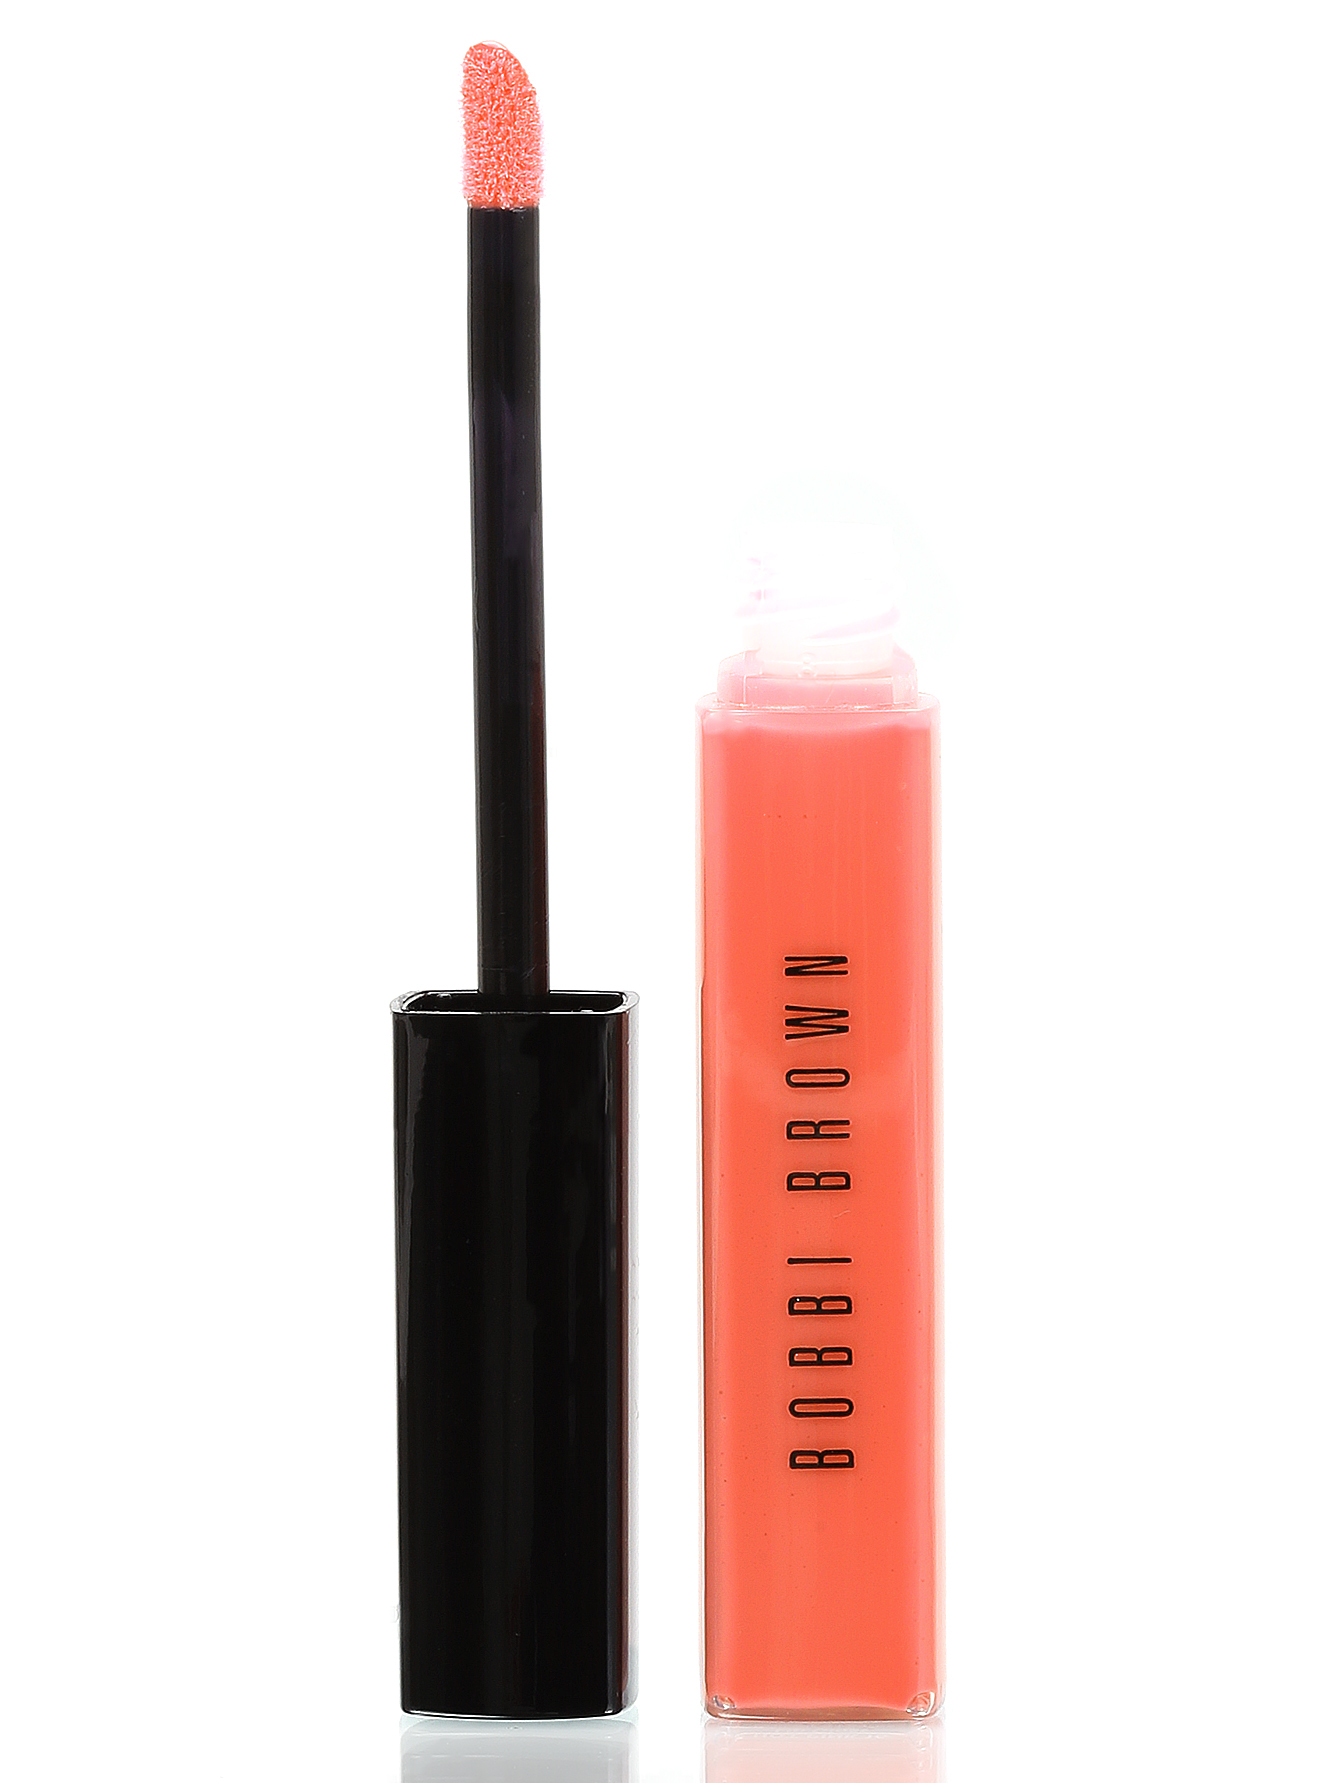 Блеск для губ - Tangerine, Lip Gloss - Модель Верх-Низ